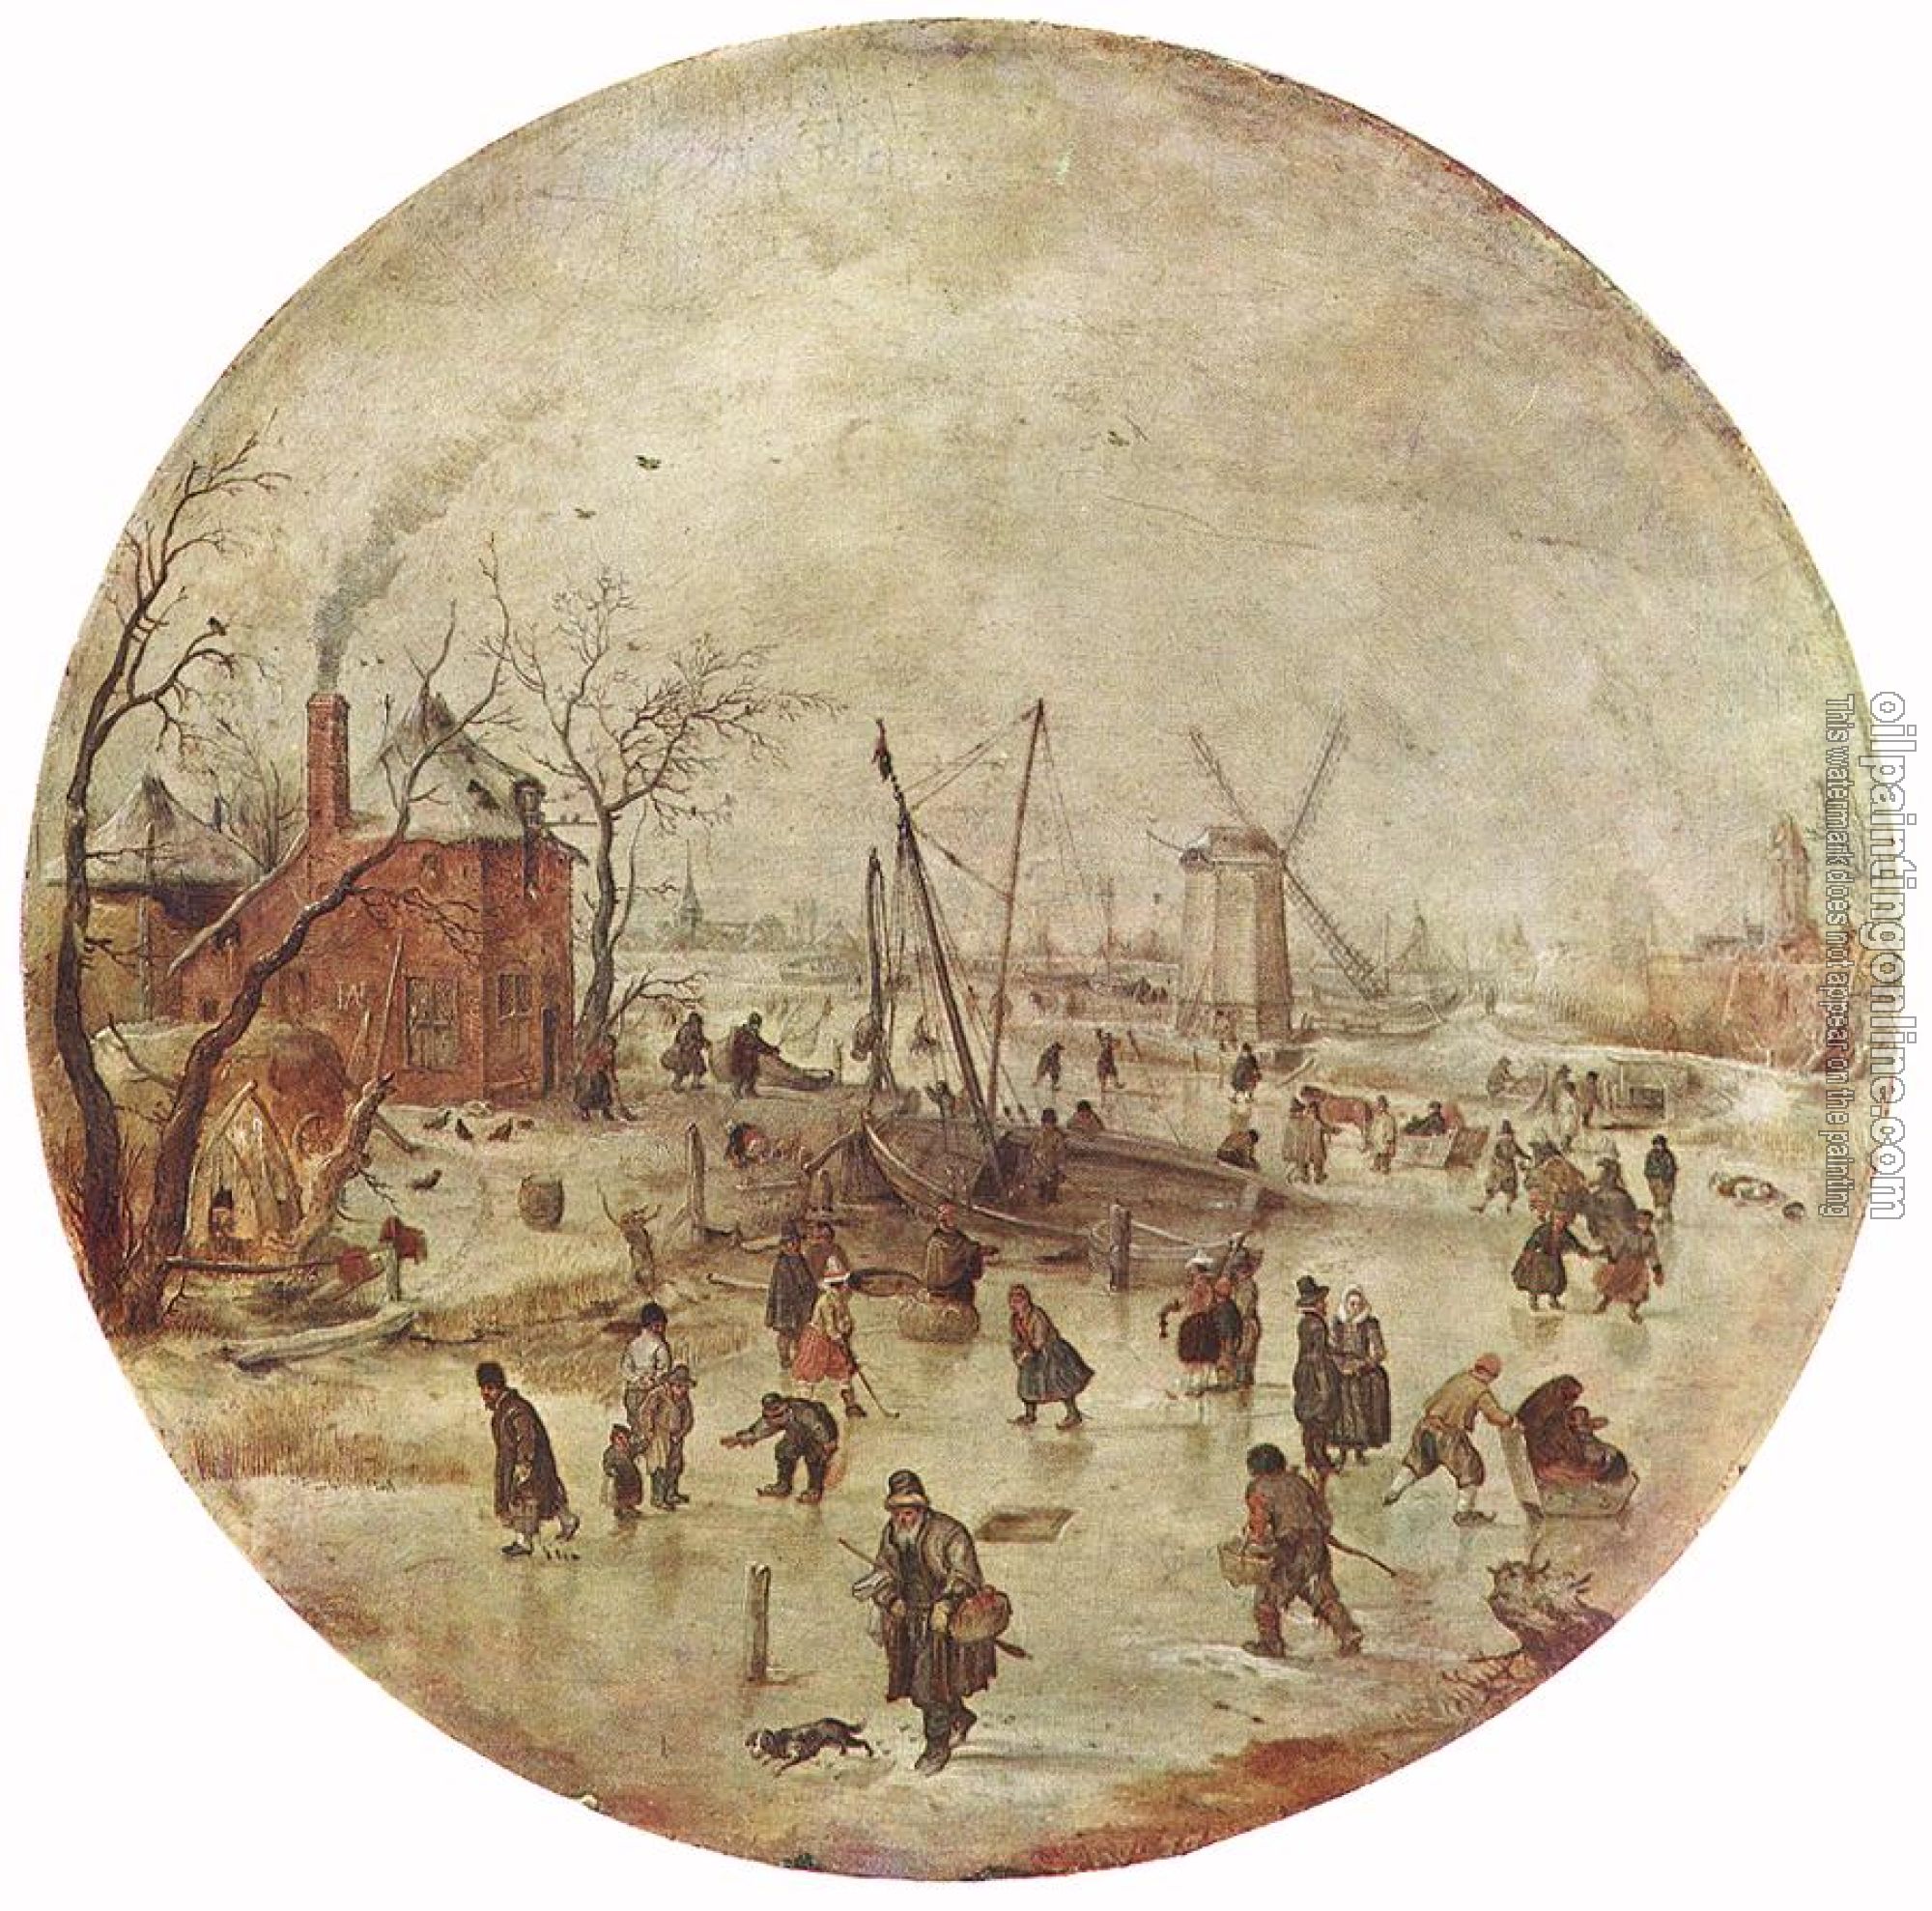 Avercamp, Hendrick - Winter Landscape With Skaters